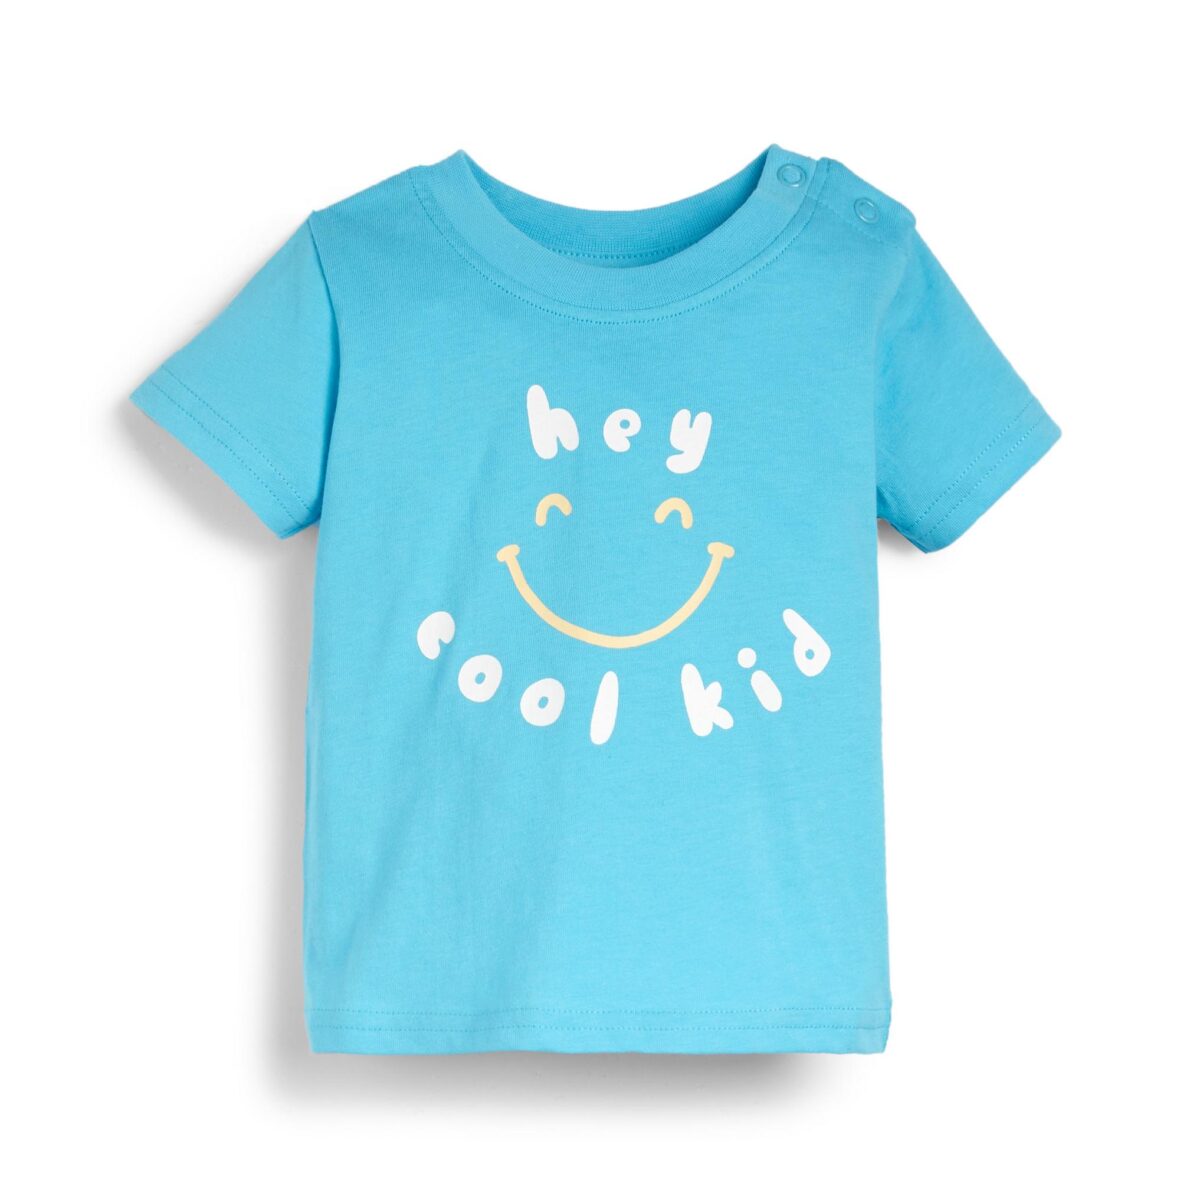 T-shirt bleu ciel à message bébé